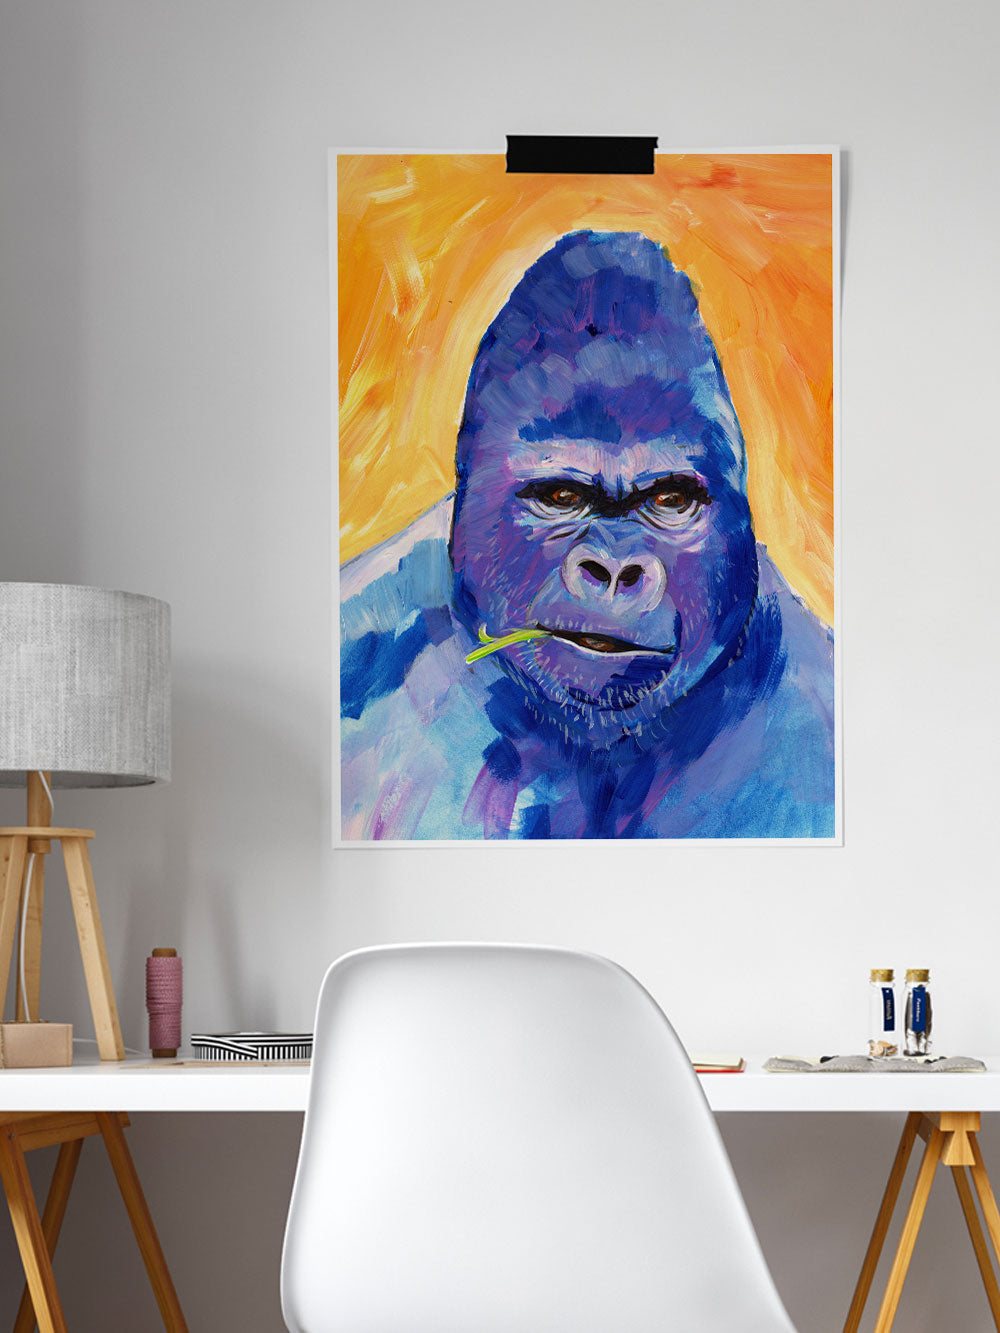 Gorilla Animal Portrait in a modern desk area